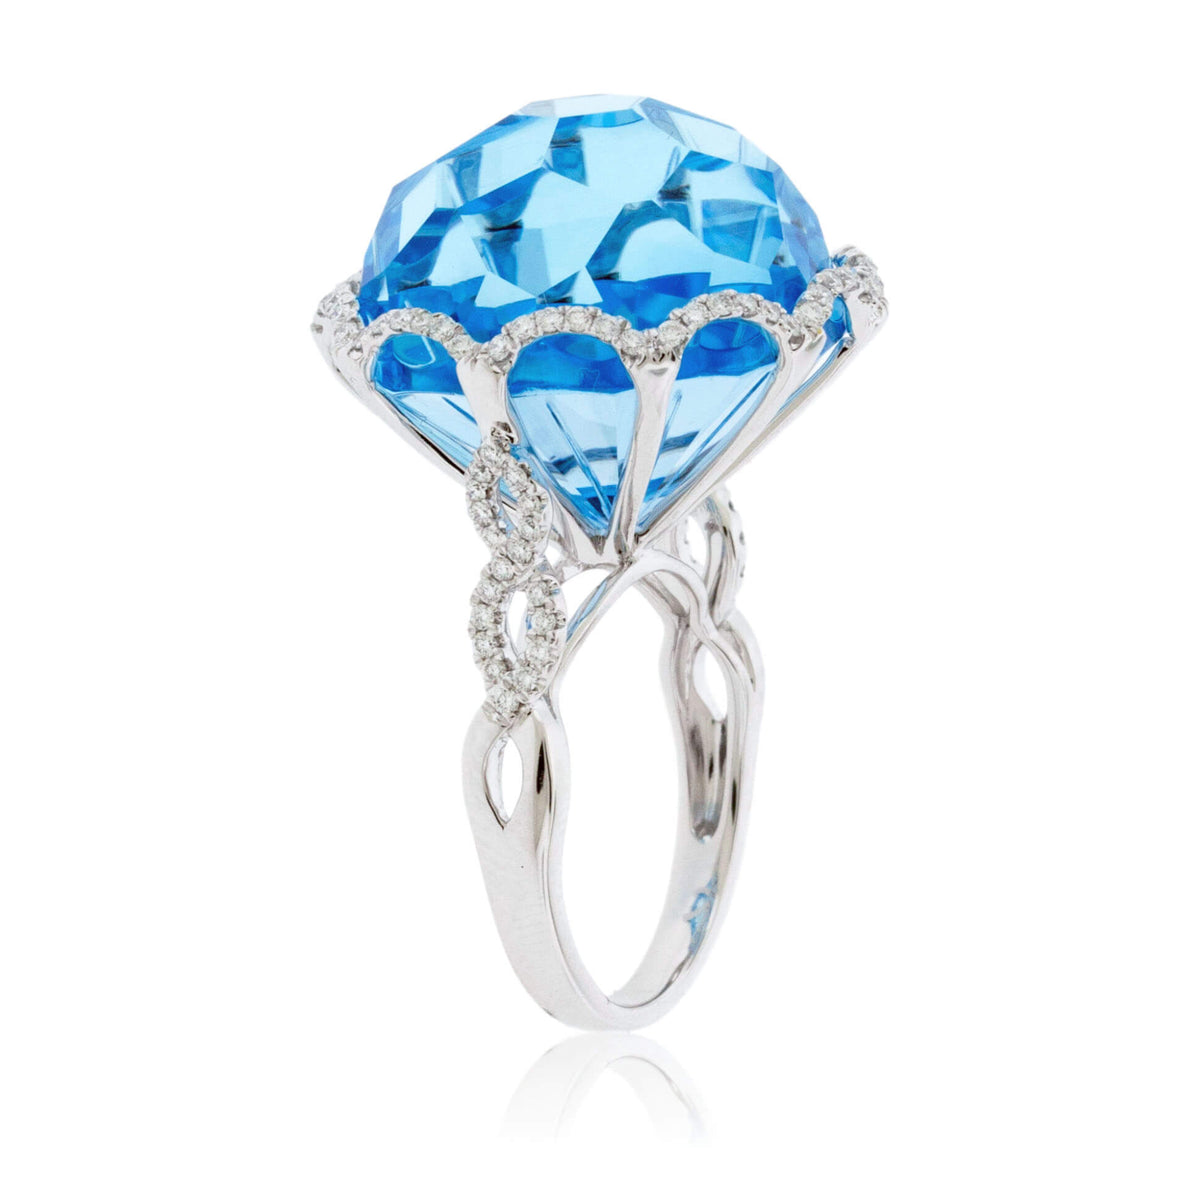 Fancy Cut Blue Topaz & Diamond Cocktail Ring - Park City Jewelers